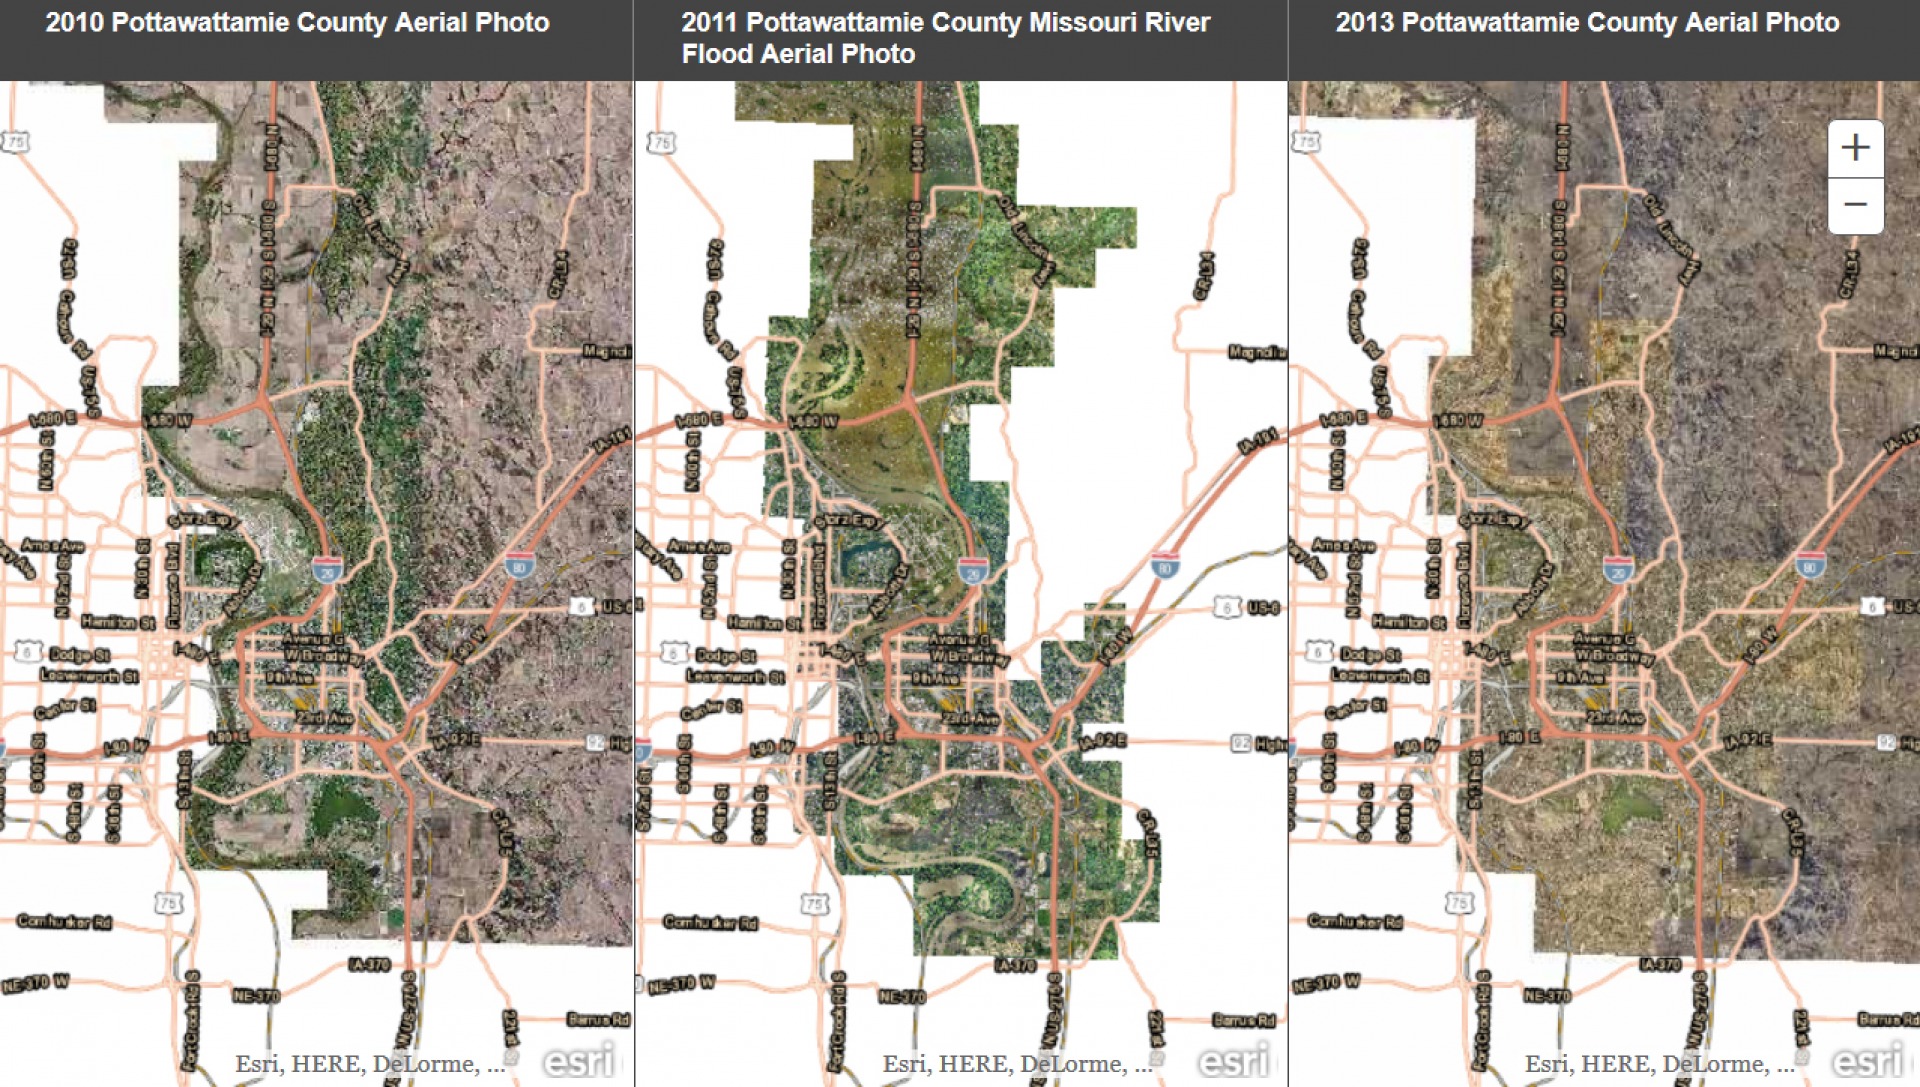 2010, 2011, and 2013 Pottawattamie County Aerial Photos for Flood Comparison